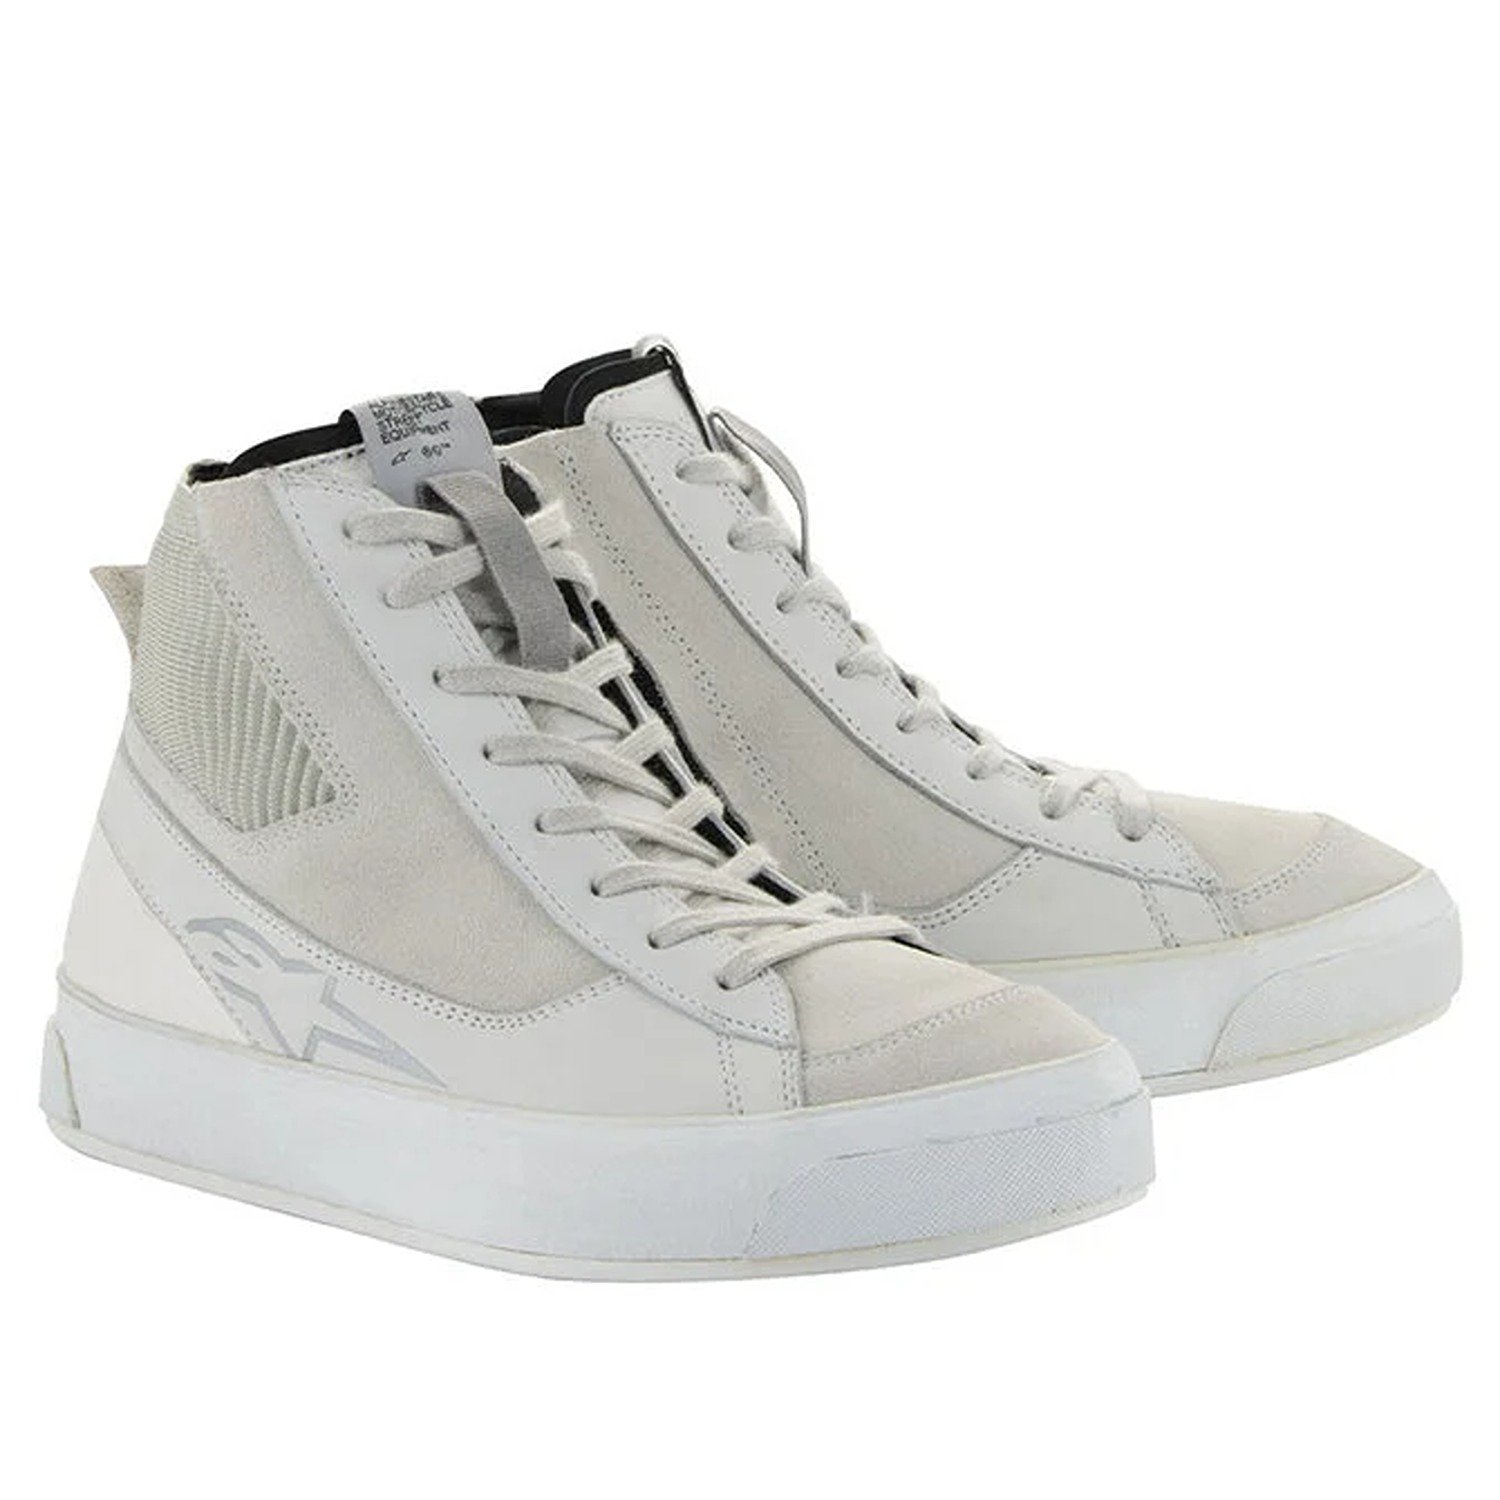 Image of Alpinestars Stella Stated Podium Shoes White Cool Gray Talla US 115